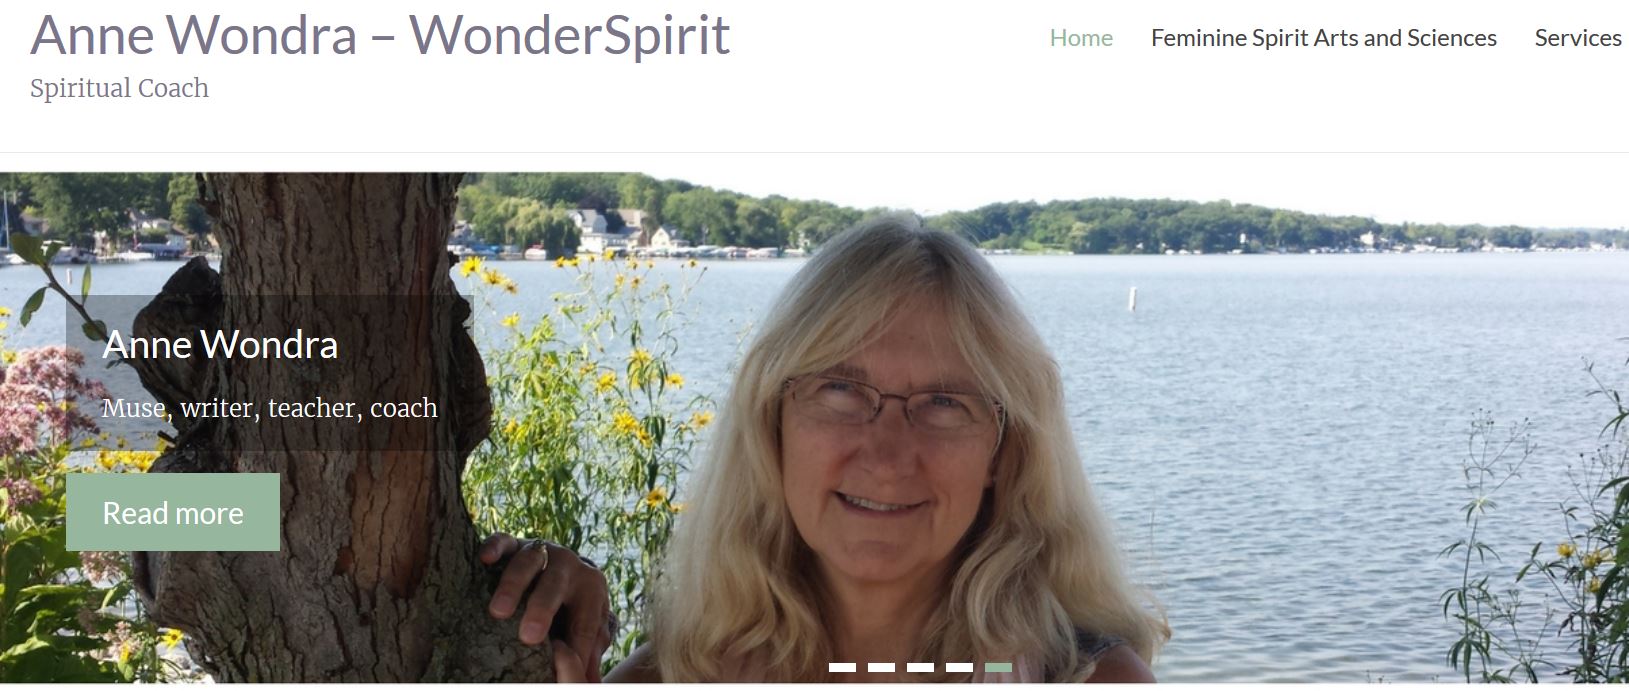 Anne Wondra WonderSpirit, spiritual coach